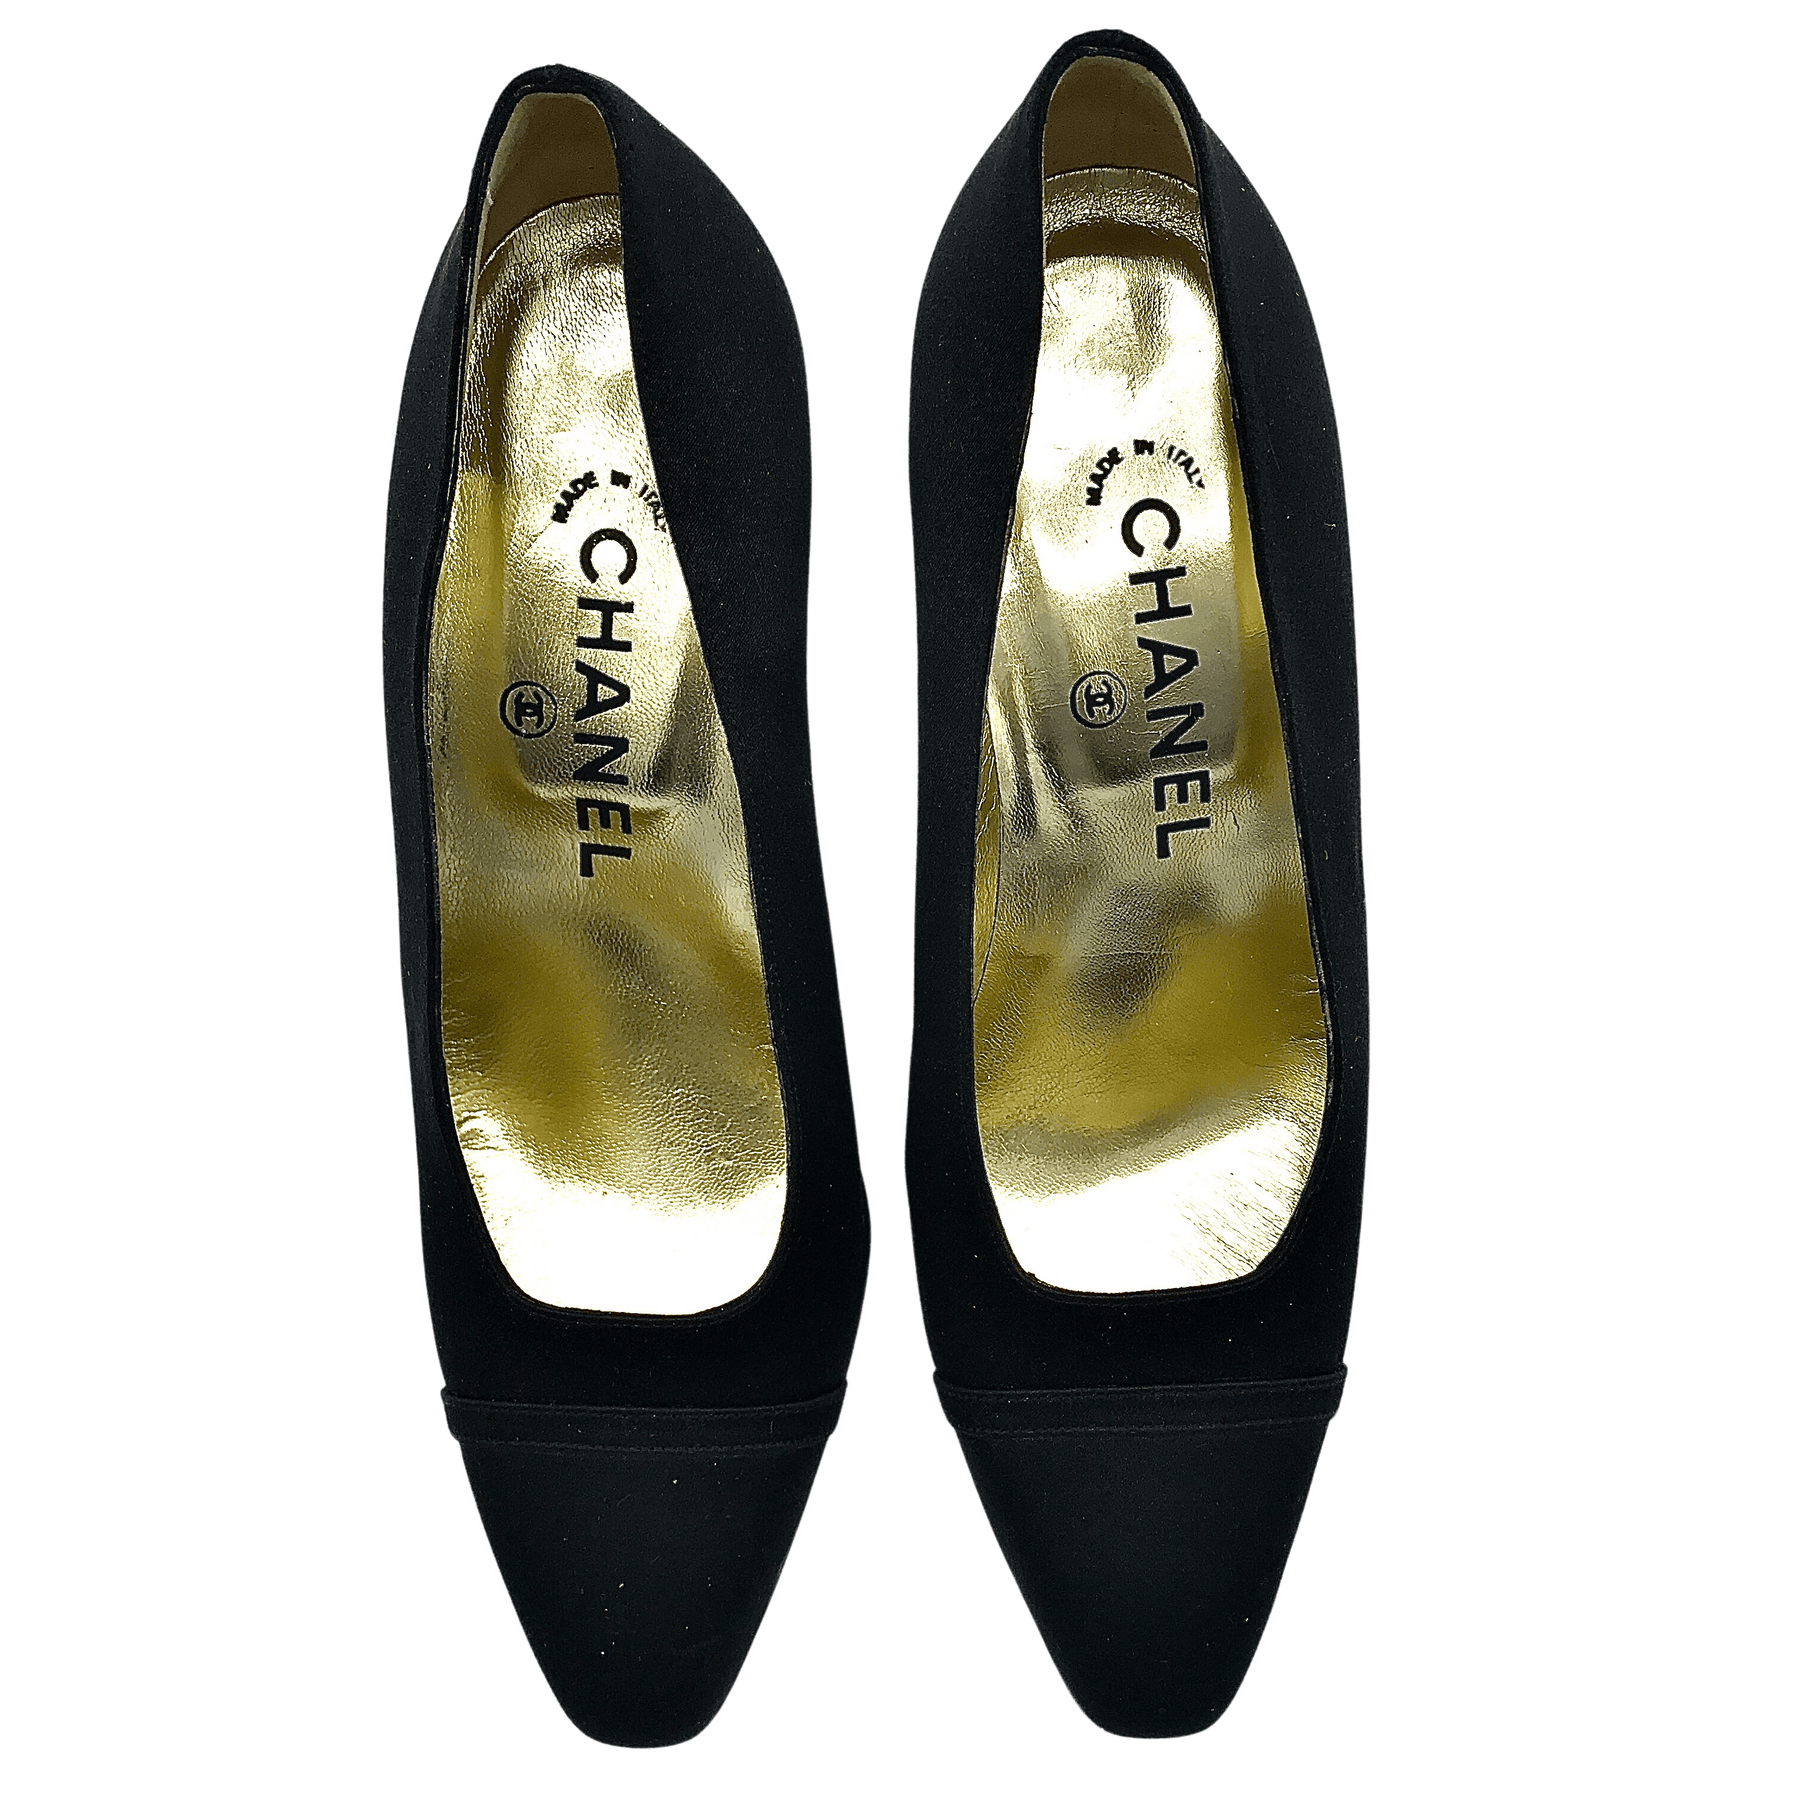 Chanel Vintage Slingback High Heeled Shoes in White and Black Leather   Menage Modern Vintage